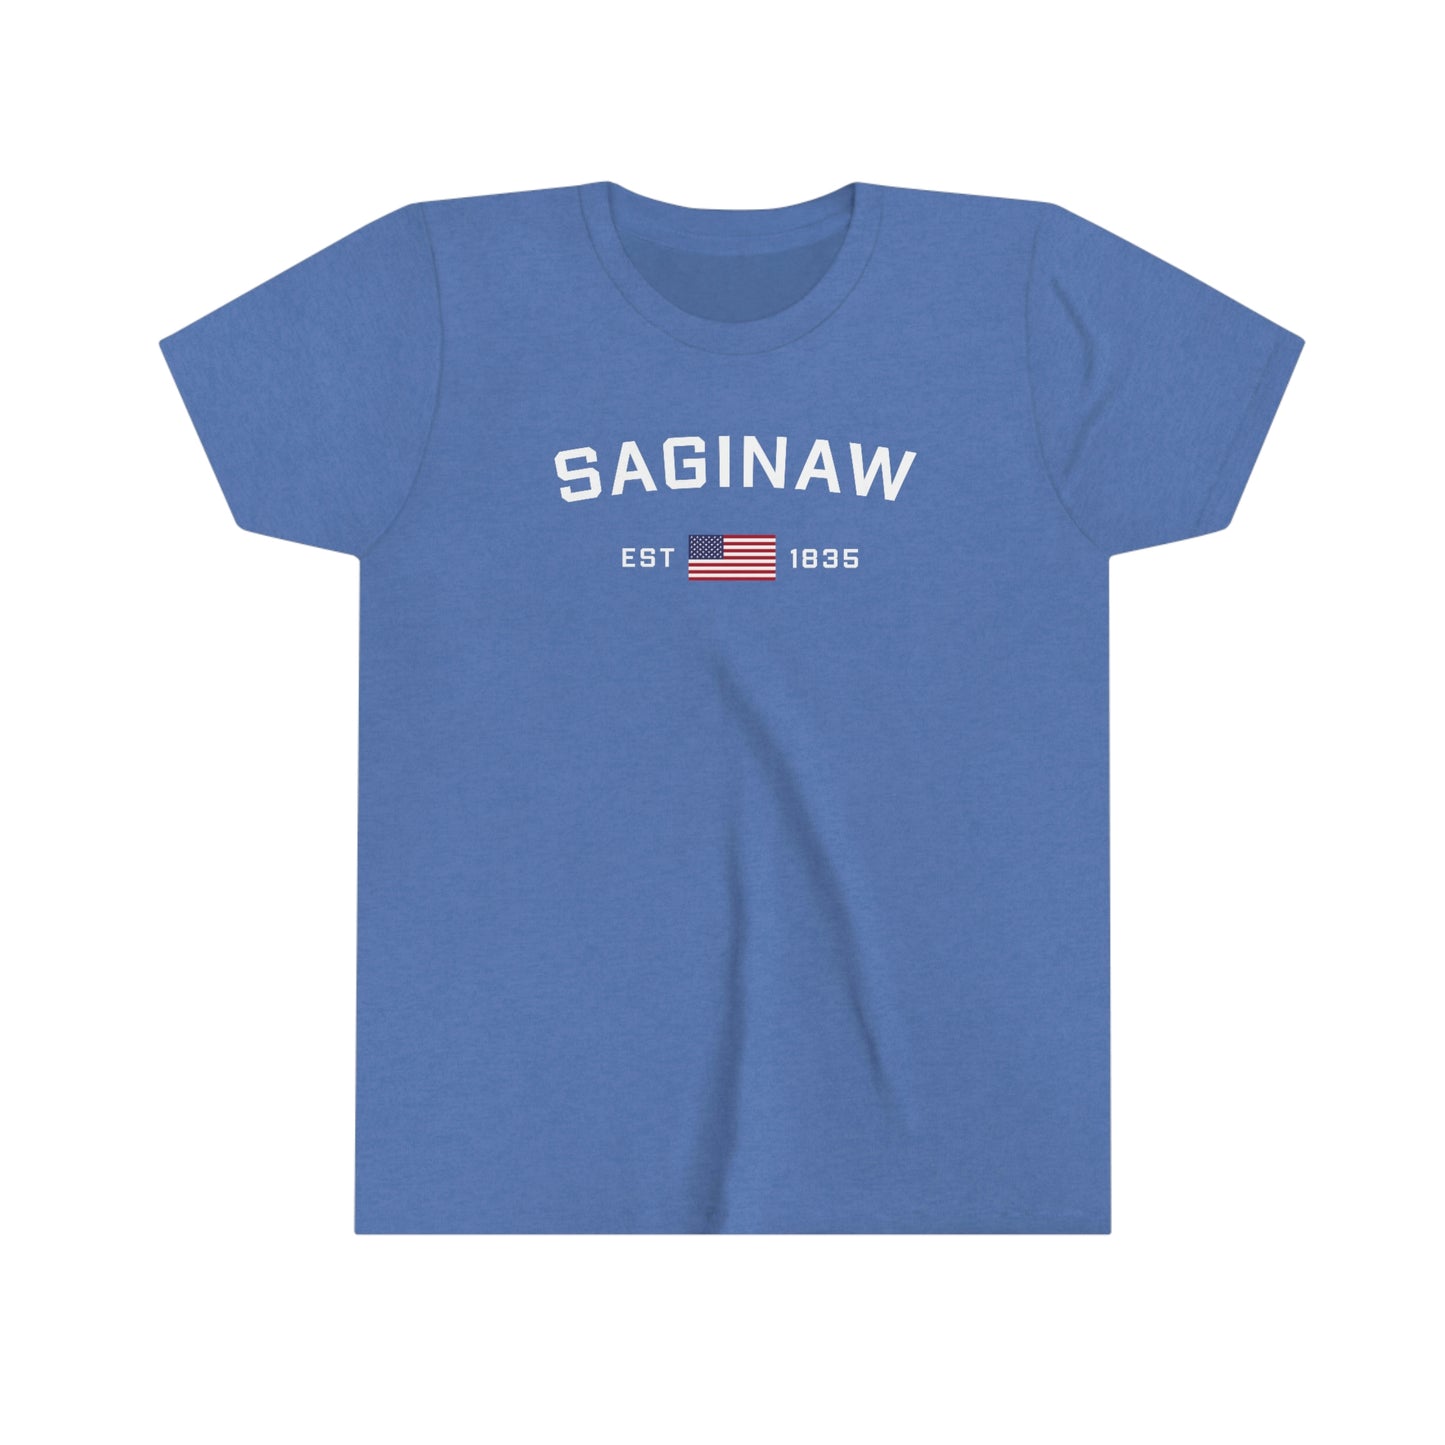 'Saginaw EST 1835' T-Shirt | Youth Short Sleeve